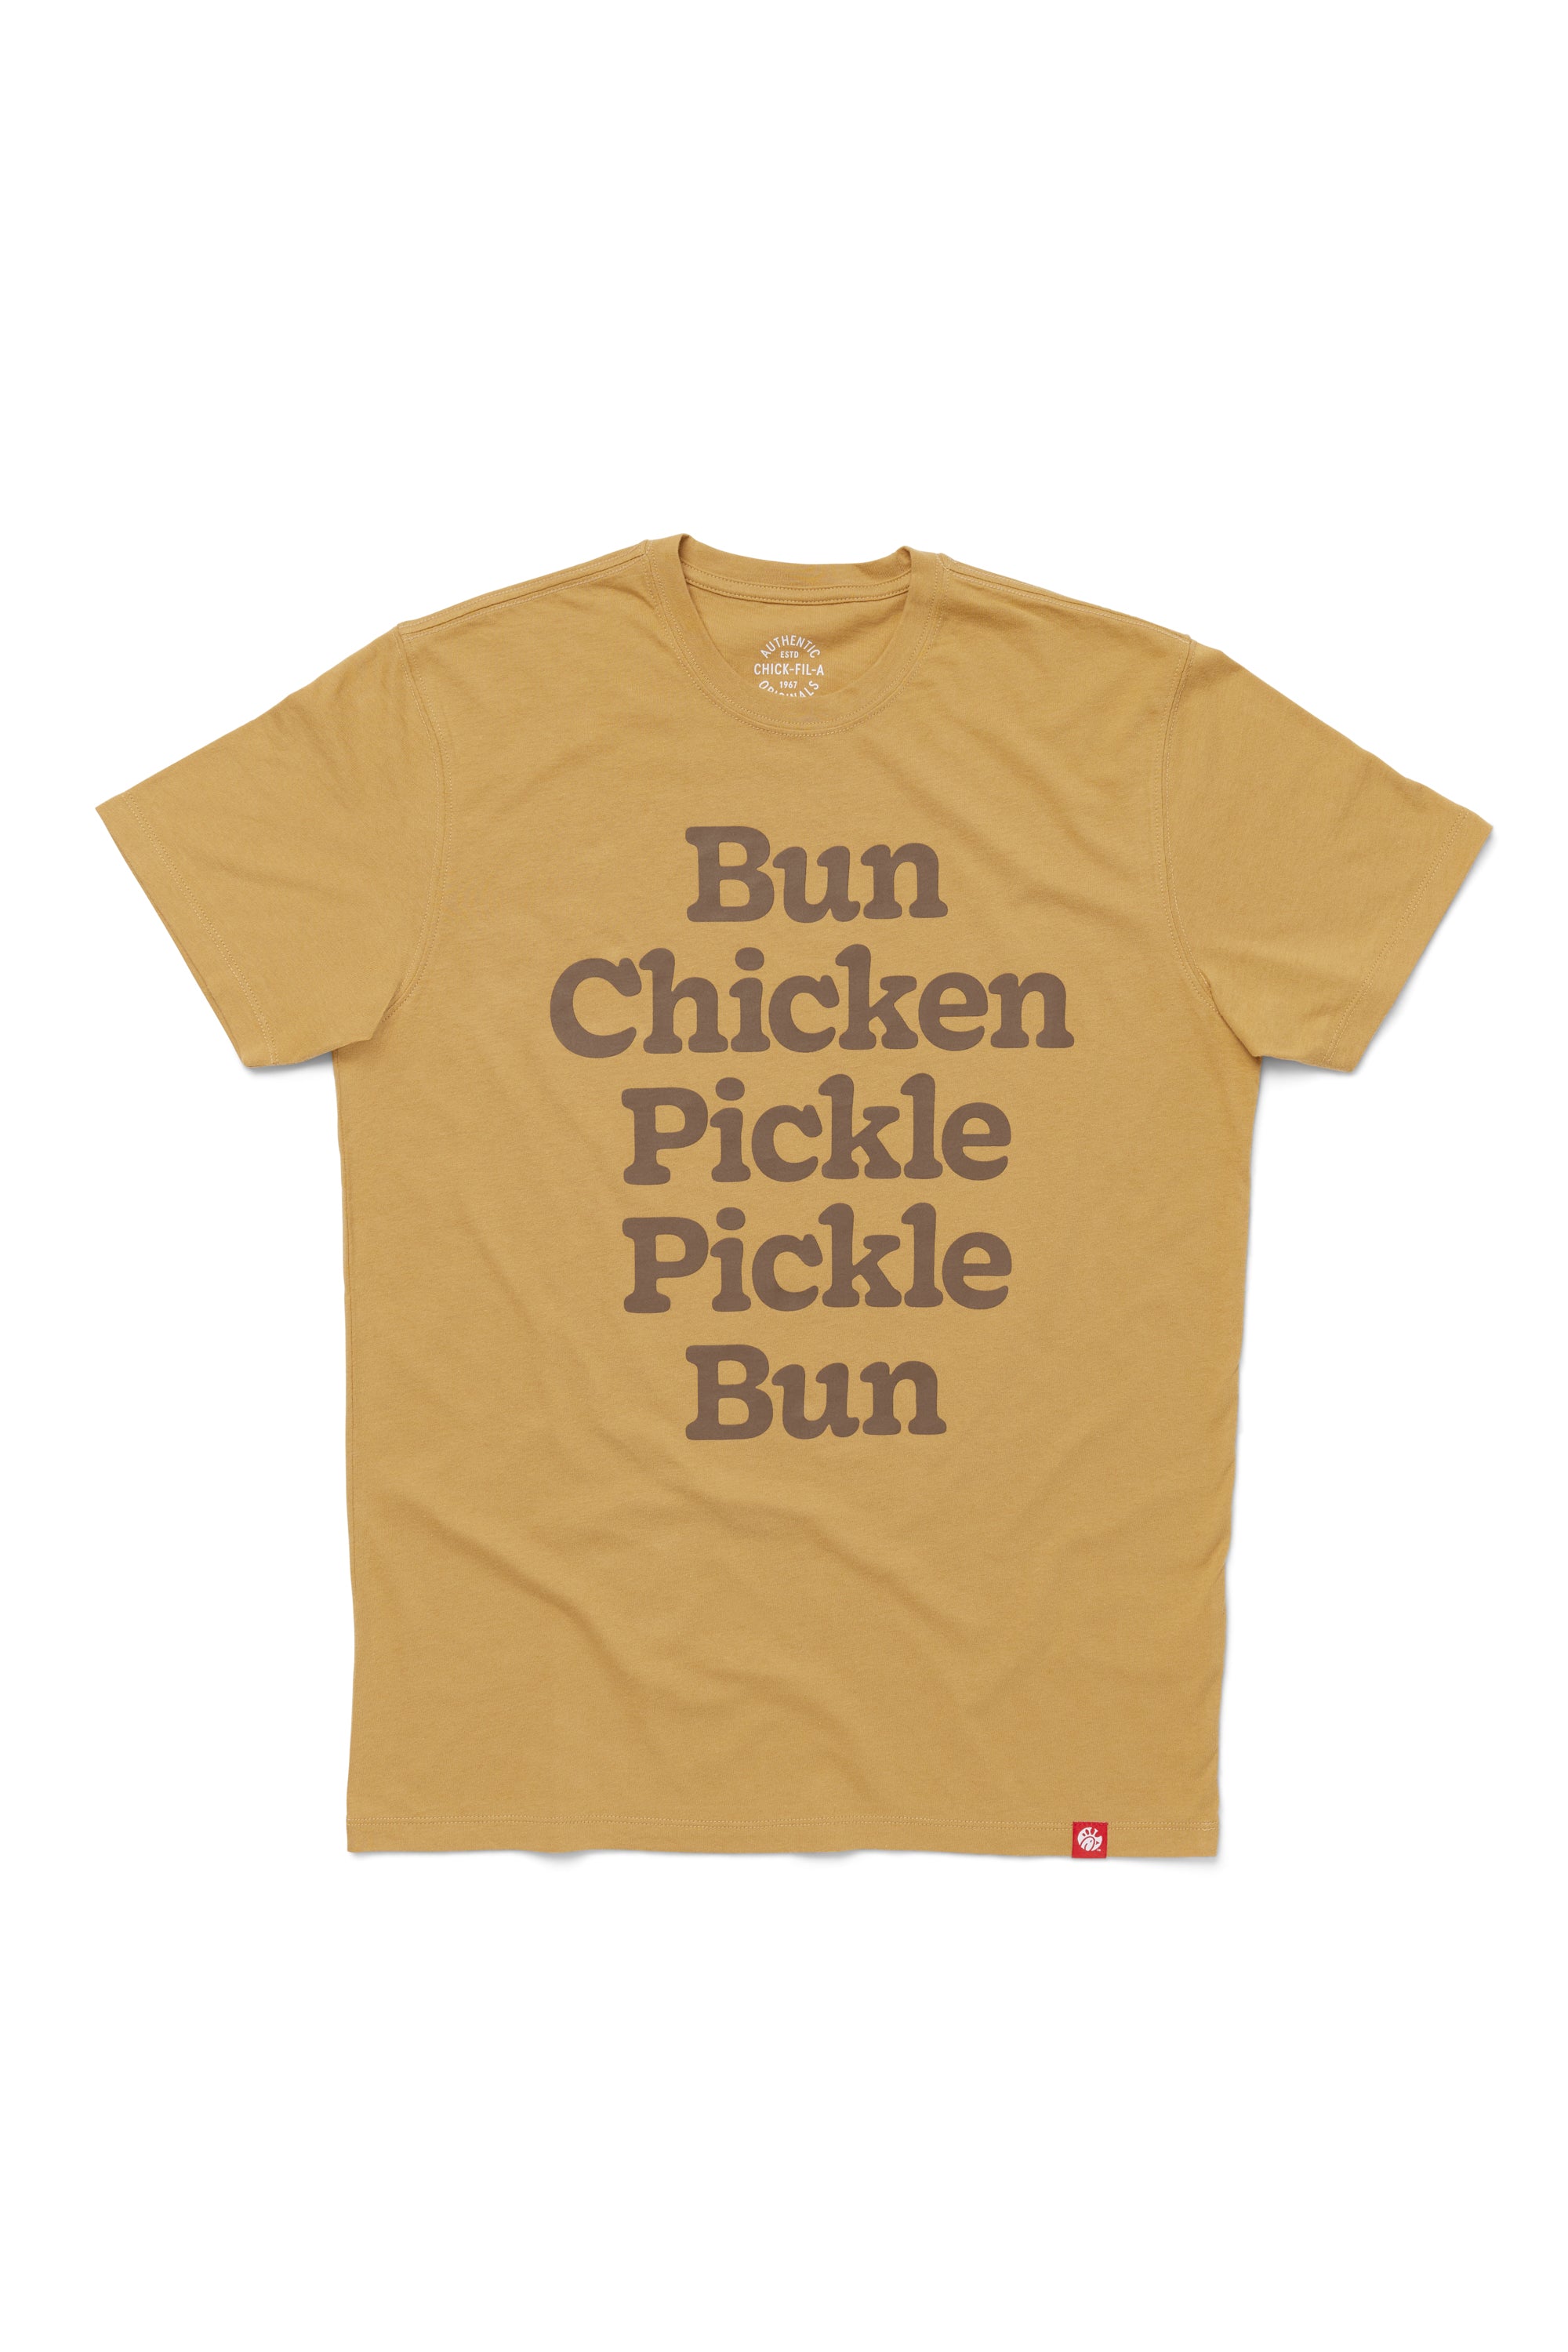 Bun Chicken Pickle Pickle Bun Tee with “Bun Chicken Pickle Pickle Bun” printed on the front stacked like a chicken sandwich